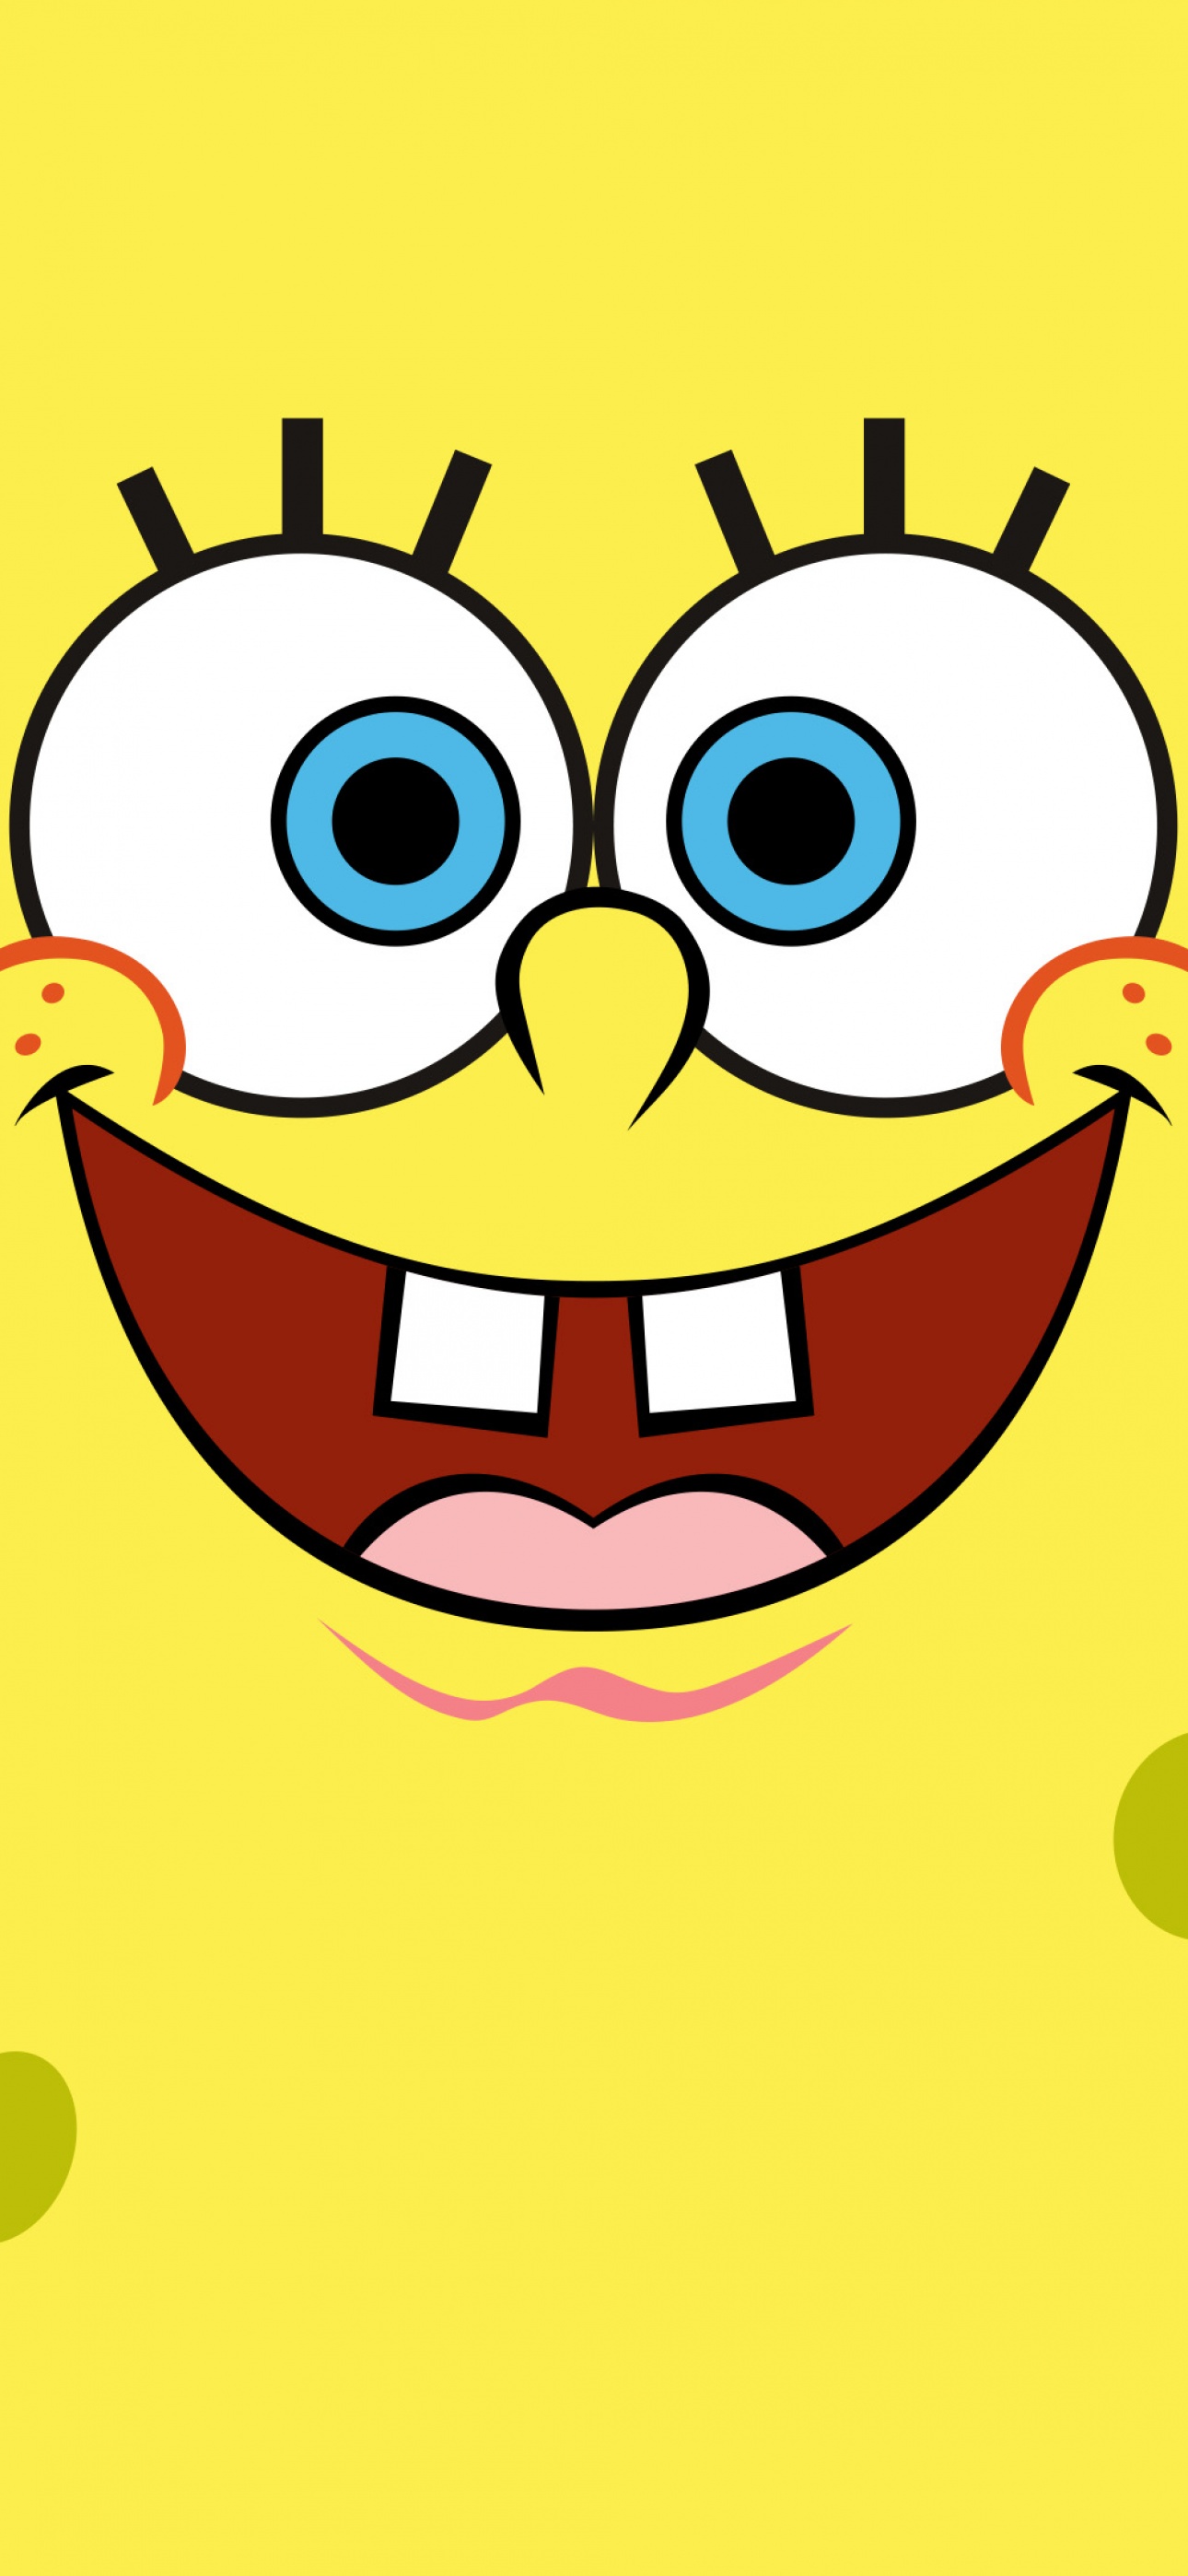 SpongeBob smiley face Wallpaper 4K, Yellow background, Minimal